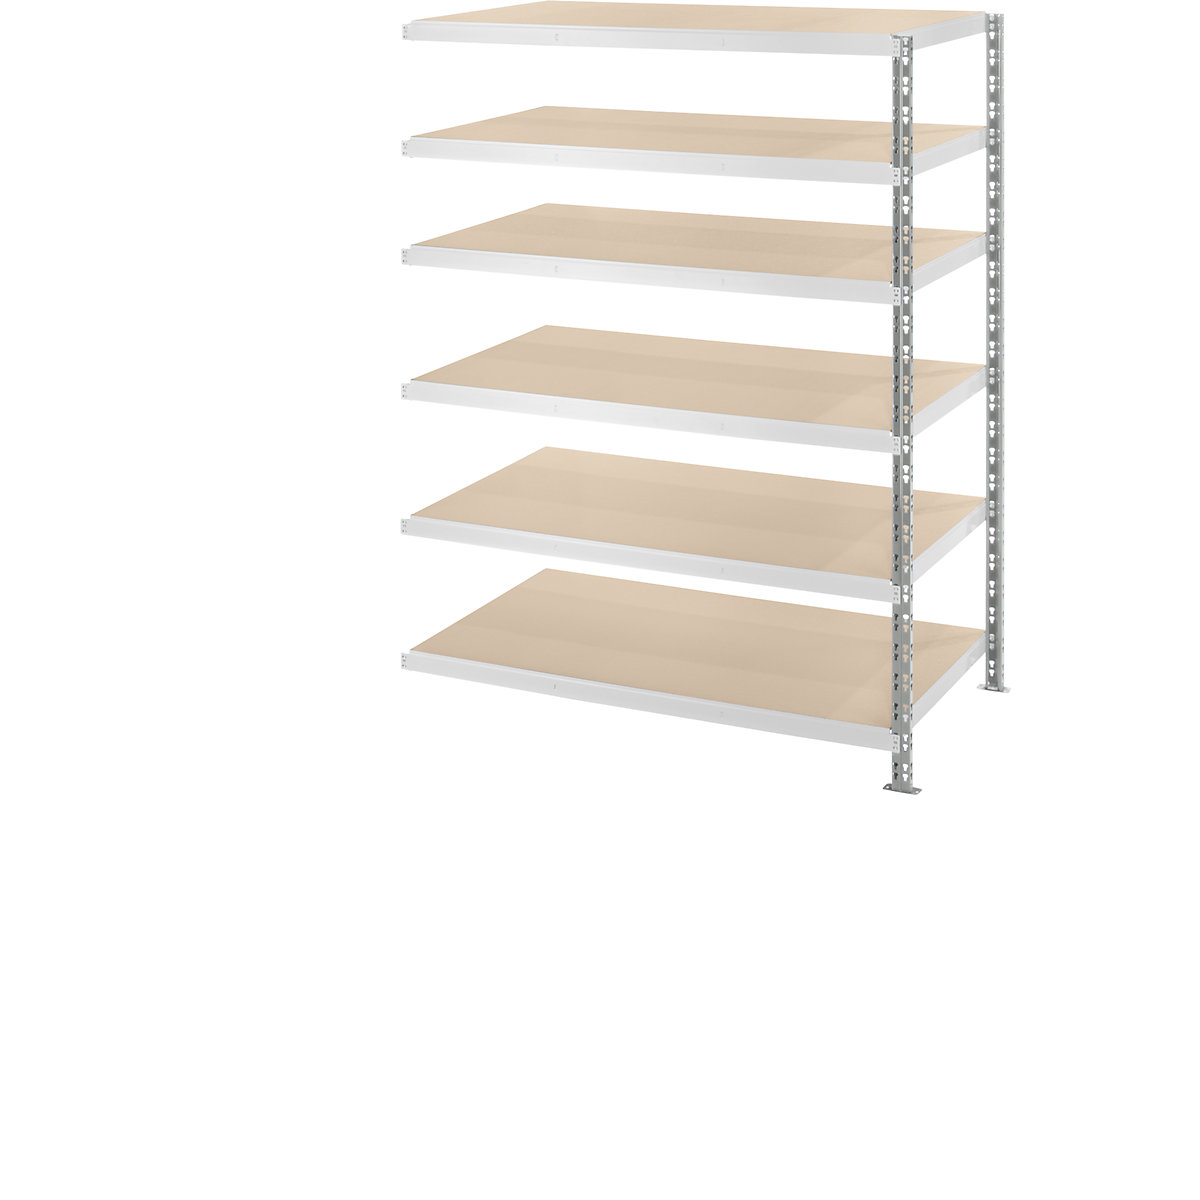 Wide span boltless shelf unit with moulded chipboard shelves, depth 800 mm, extension shelf unit, HxW 1976 x 1525 mm